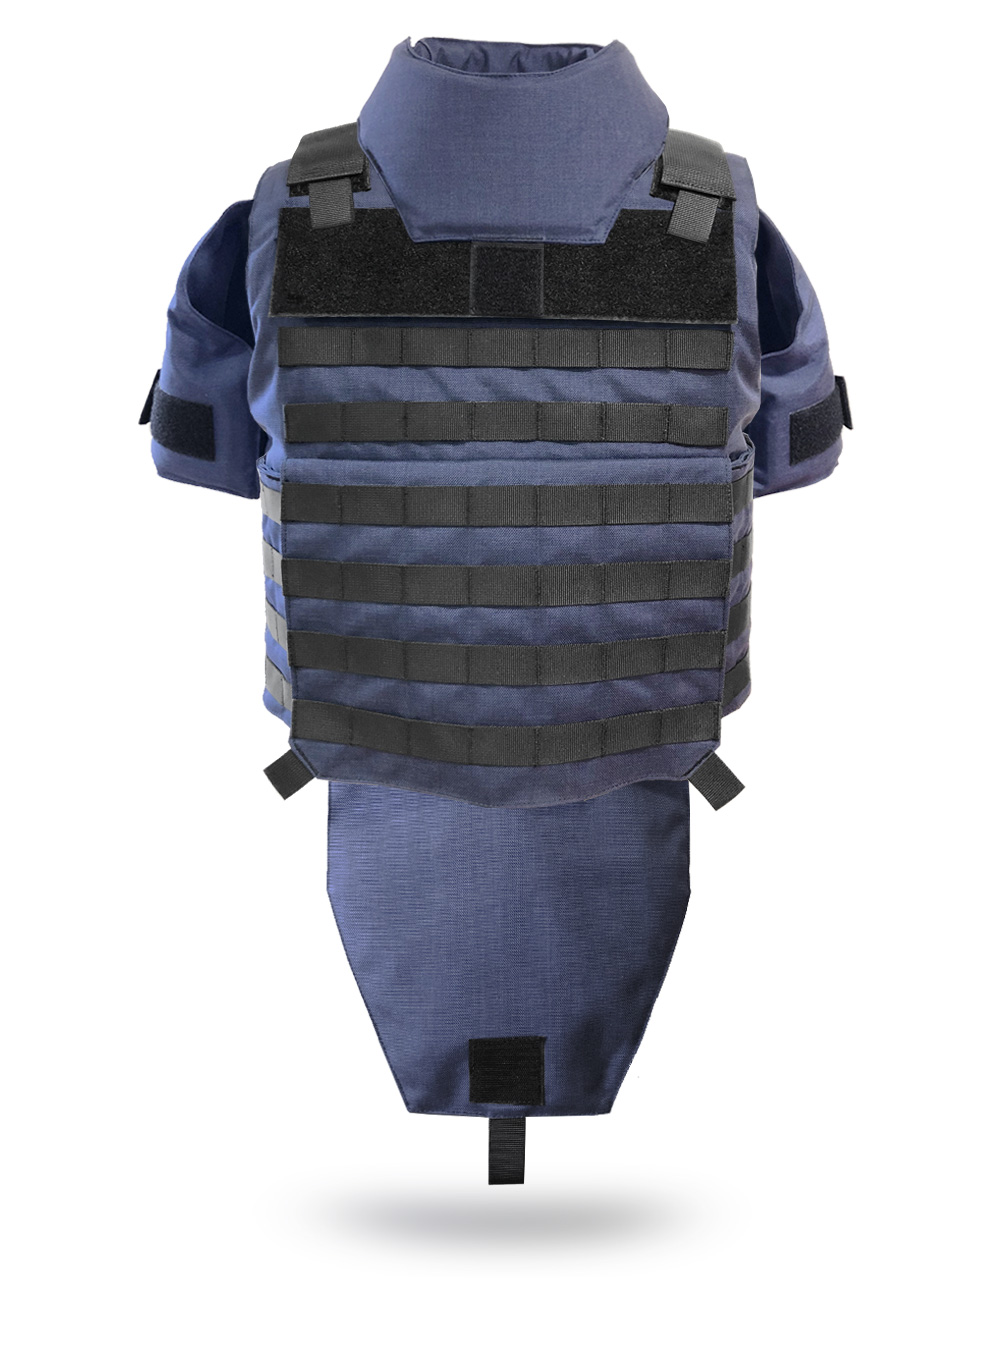 https://www.vestguard.com/user/VestGuard-Image---OT103-Overt-Tactical-ELITE-Front-Navy.jpg